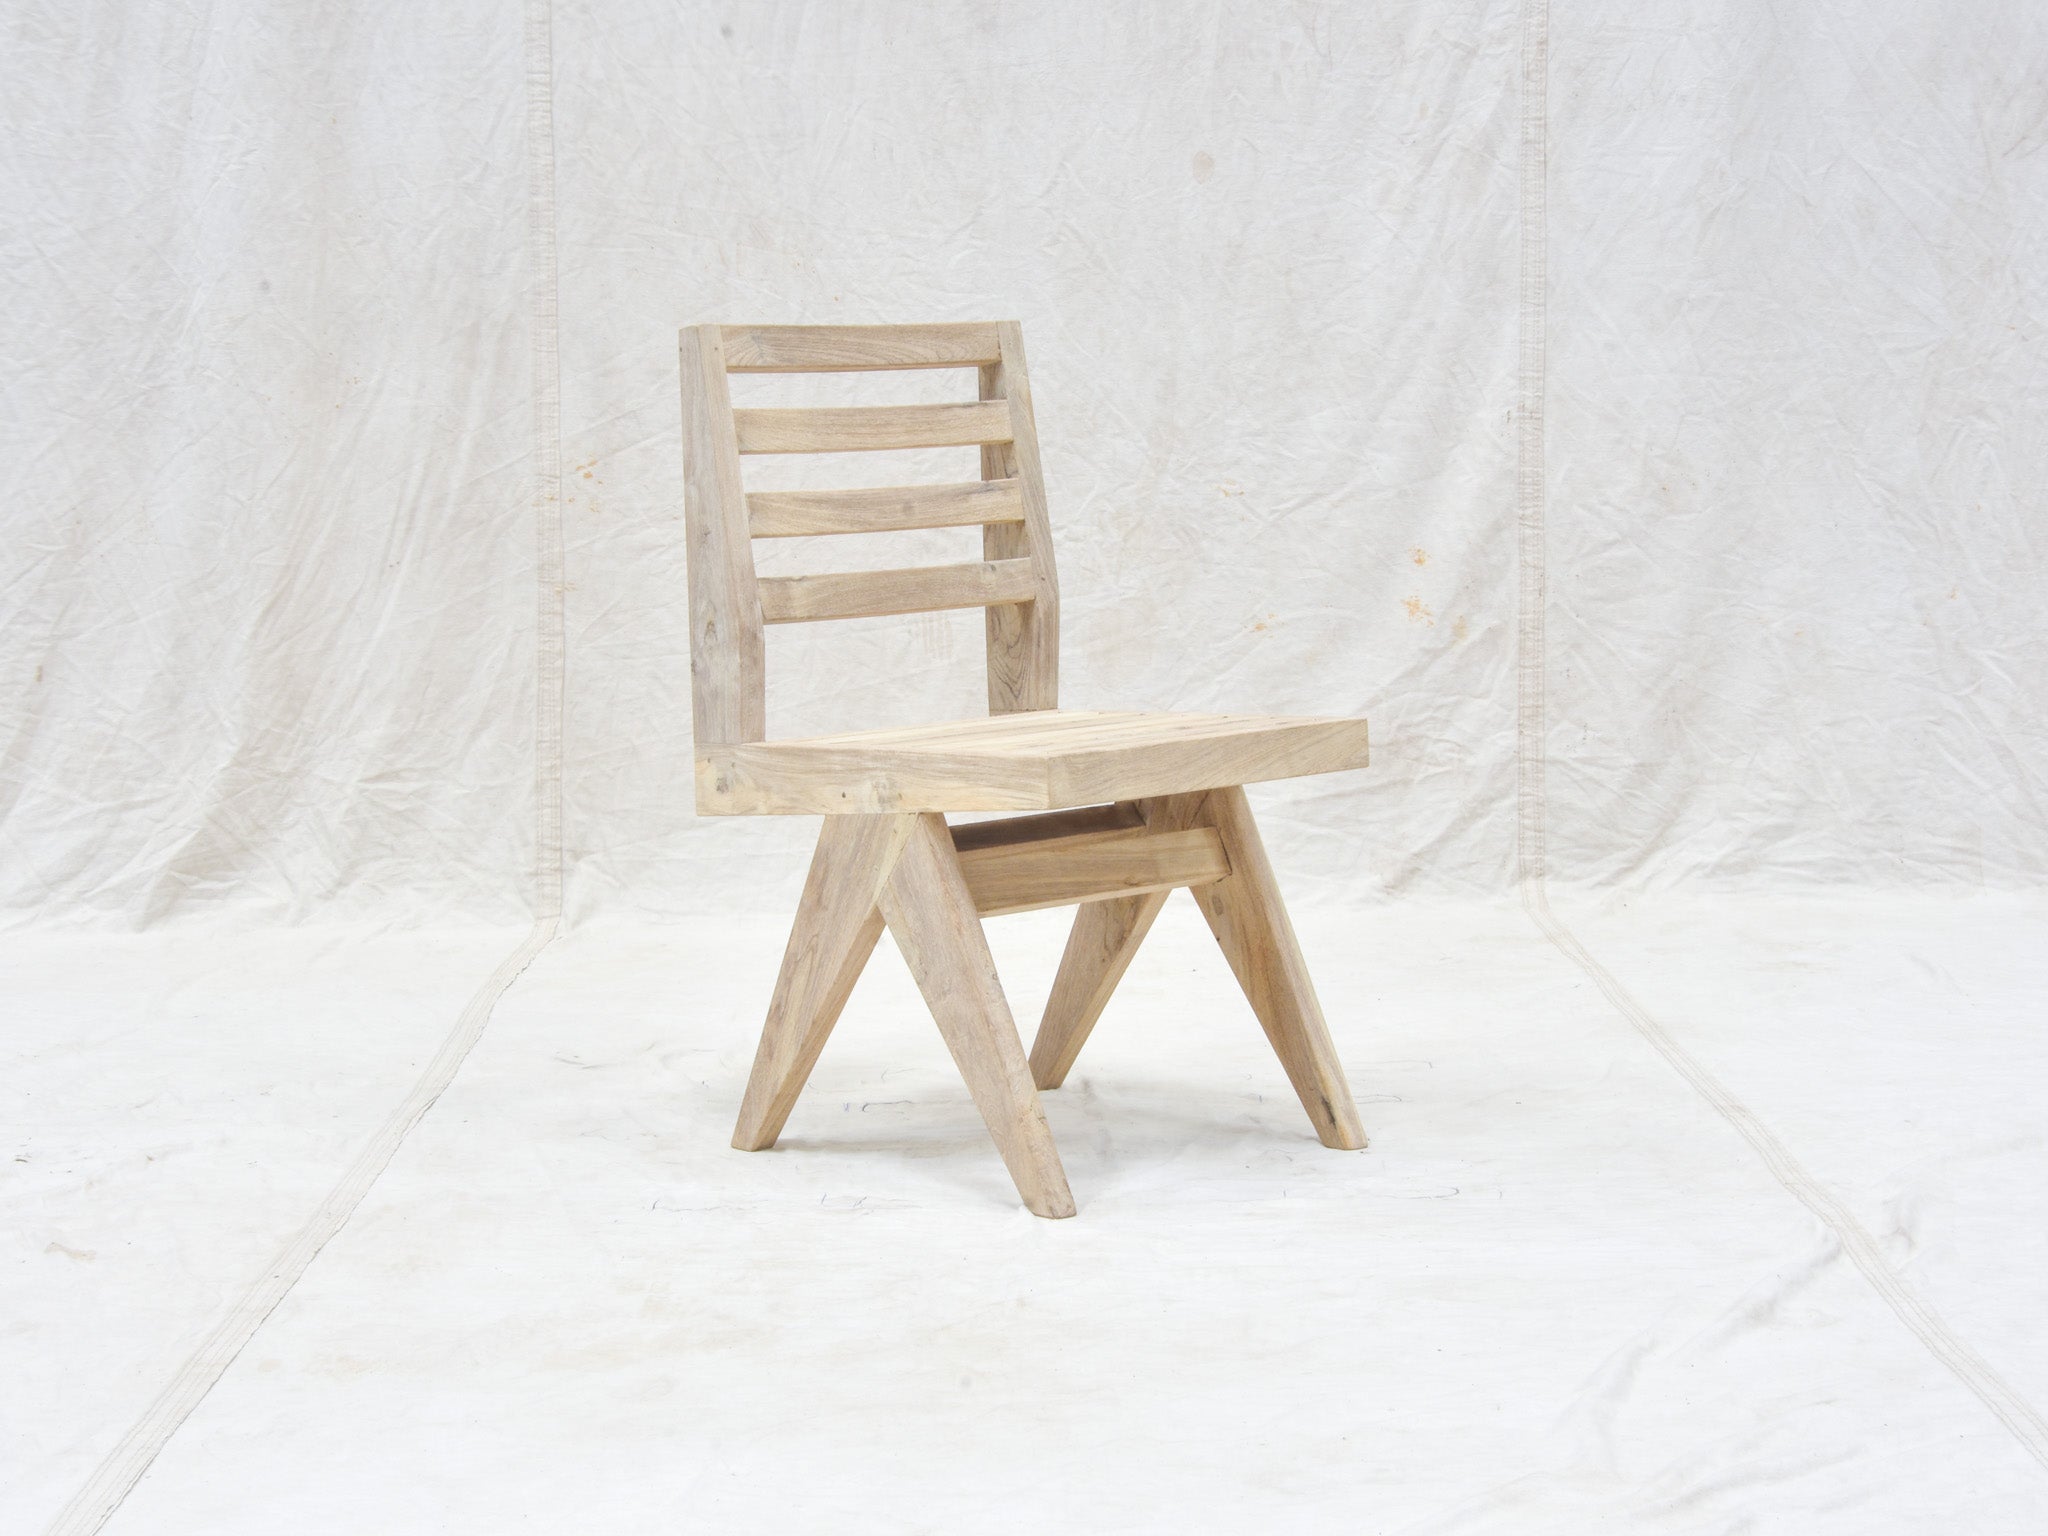 Pierre Jeanneret Slatted Student Chair-outdoor teak furniture-5